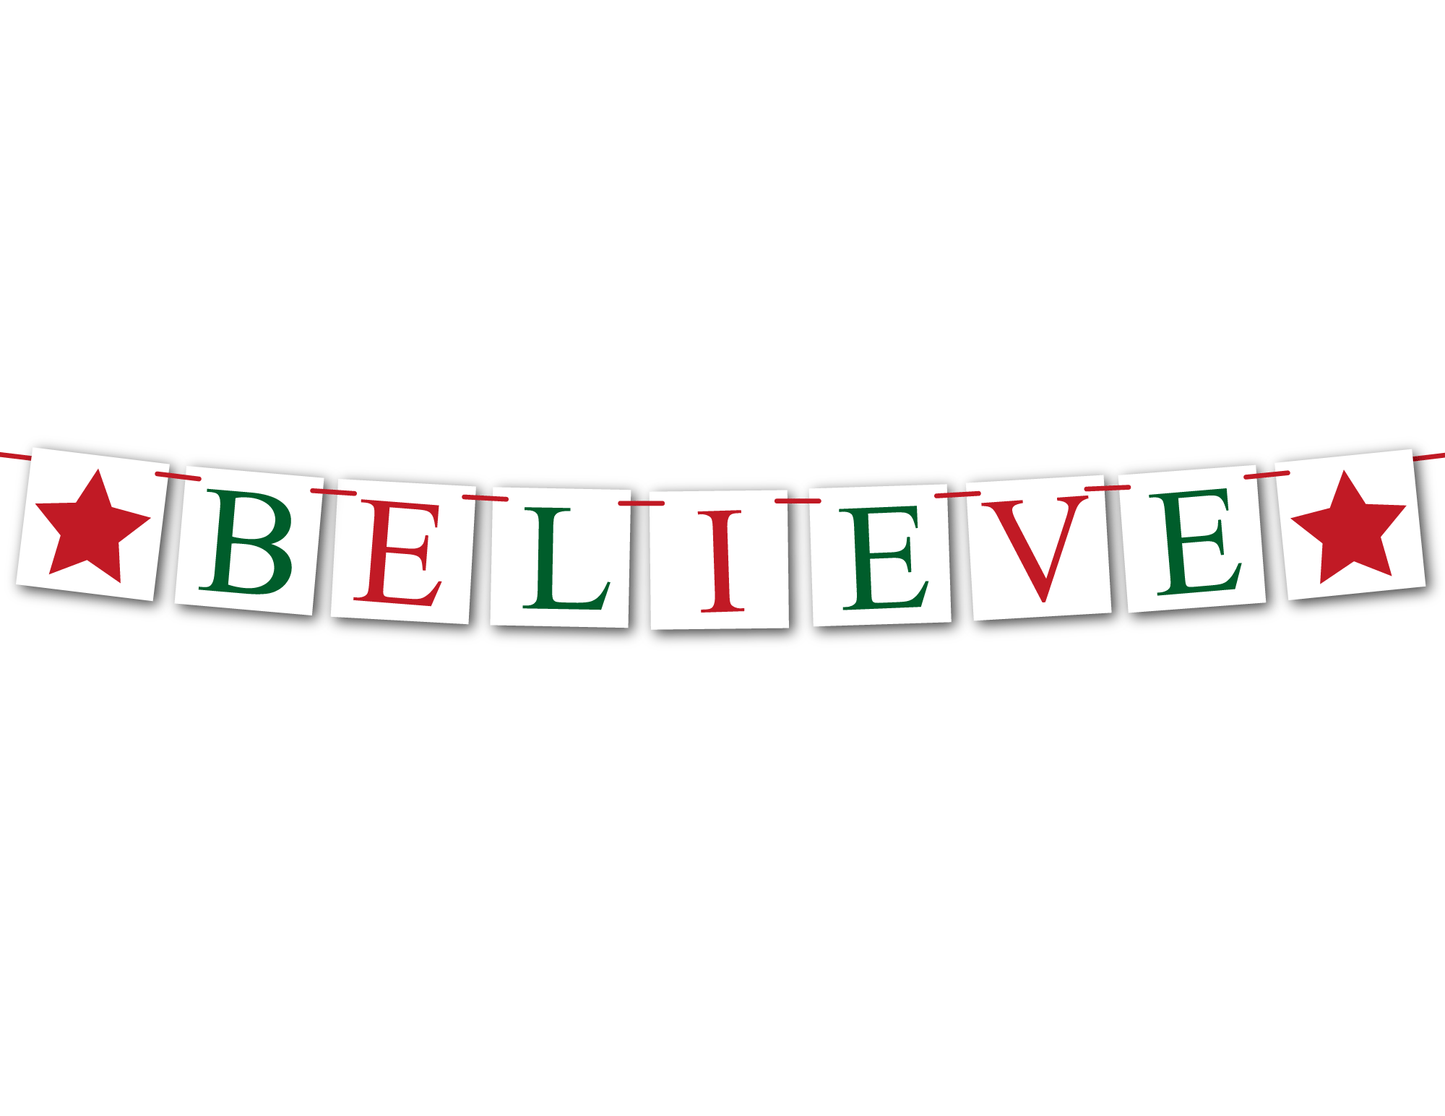 Believe banner printable Christmas decor - Celebrating Together